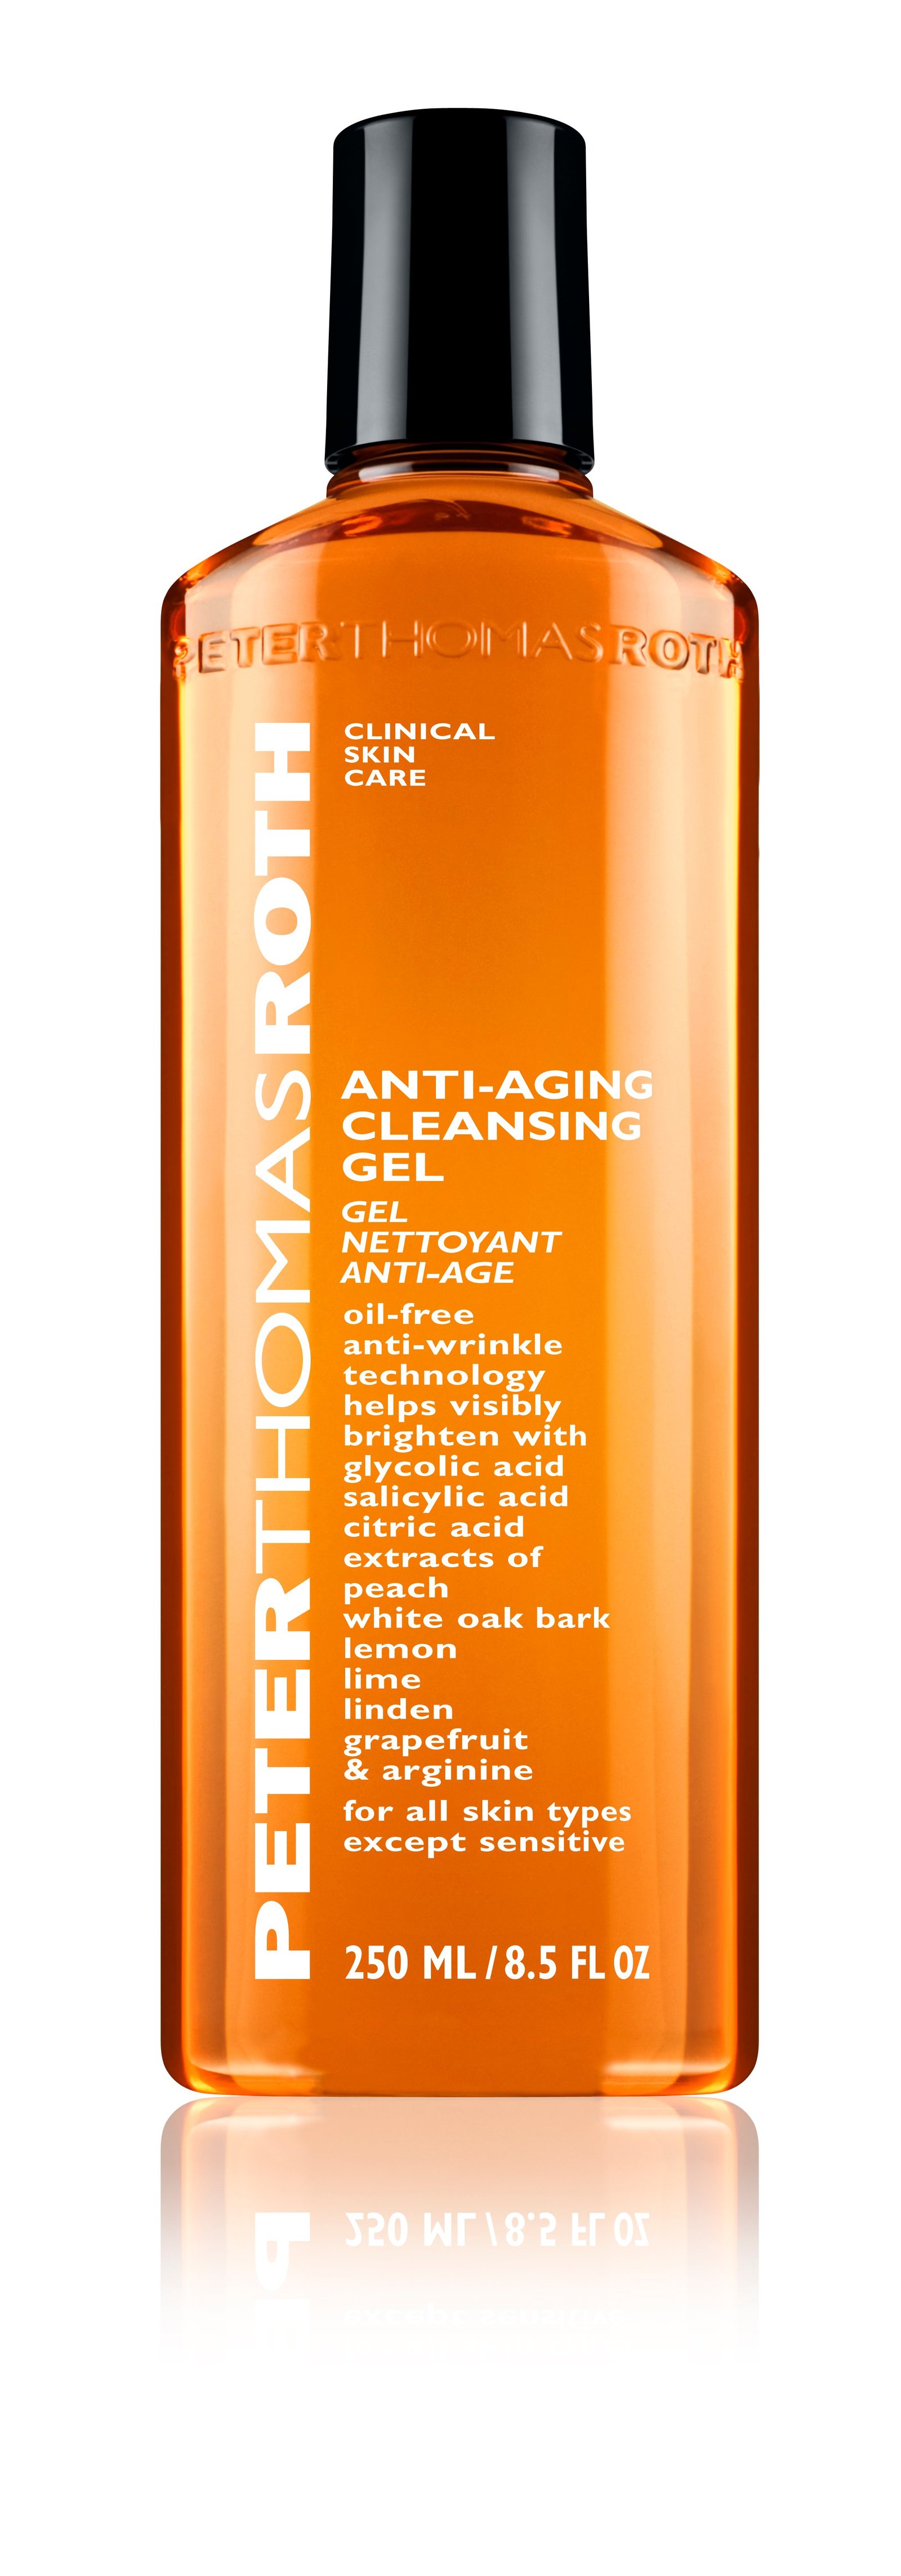 Peter Thomas Roth Anti-Aging Cleansing Gel 250 ml